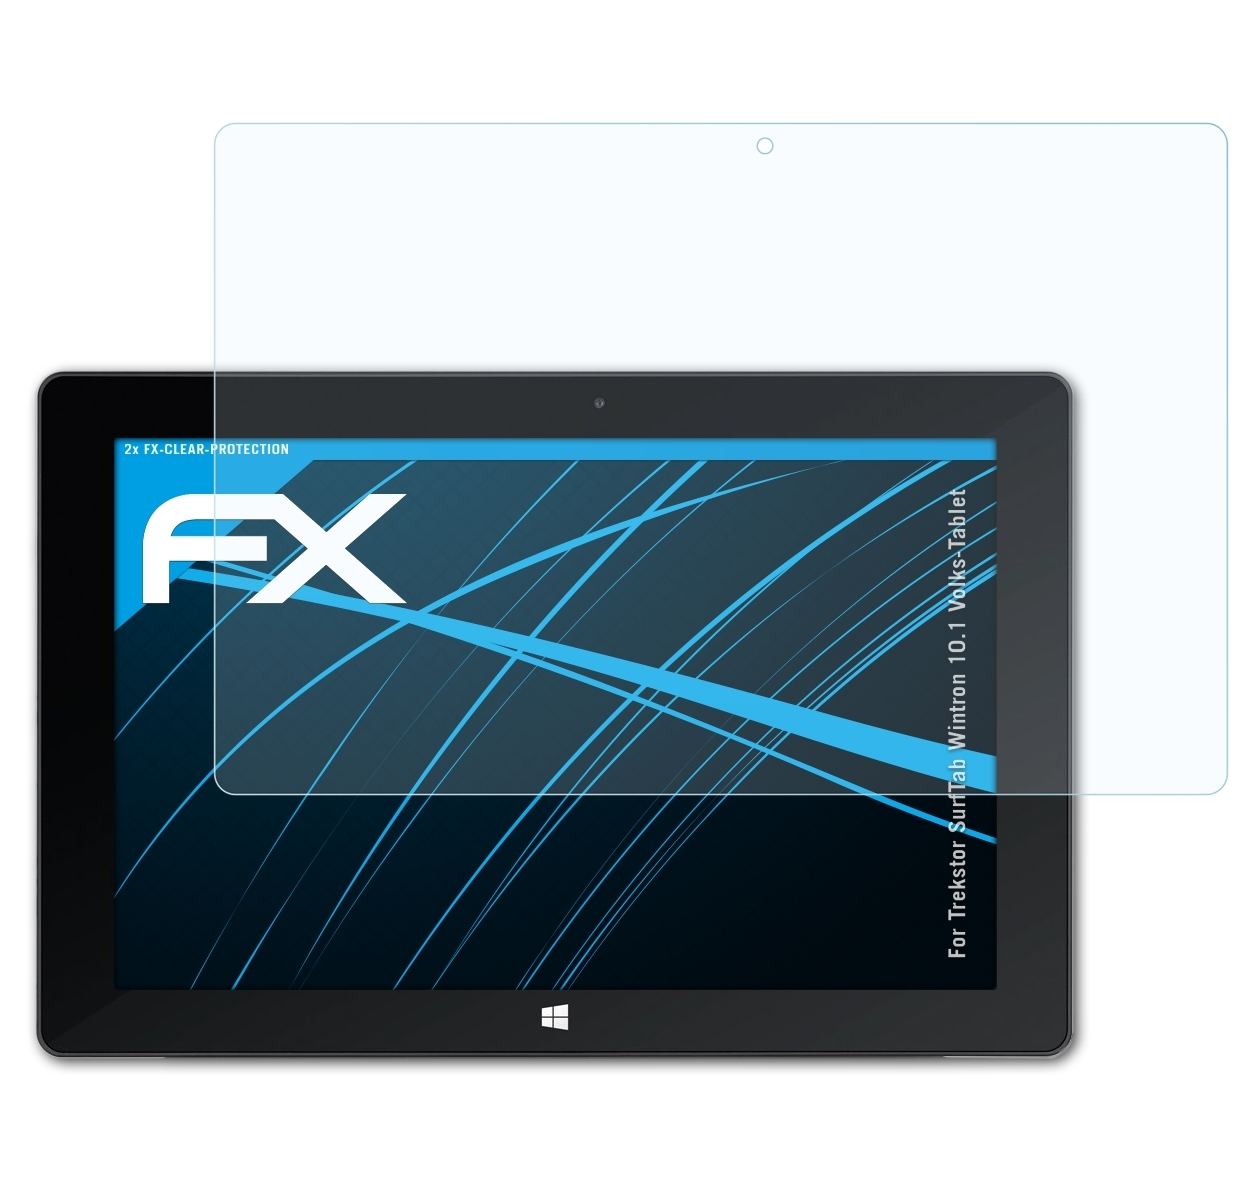 ATFOLIX 10.1 FX-Clear 2x (Volks-Tablet)) Trekstor Displayschutz(für SurfTab Wintron